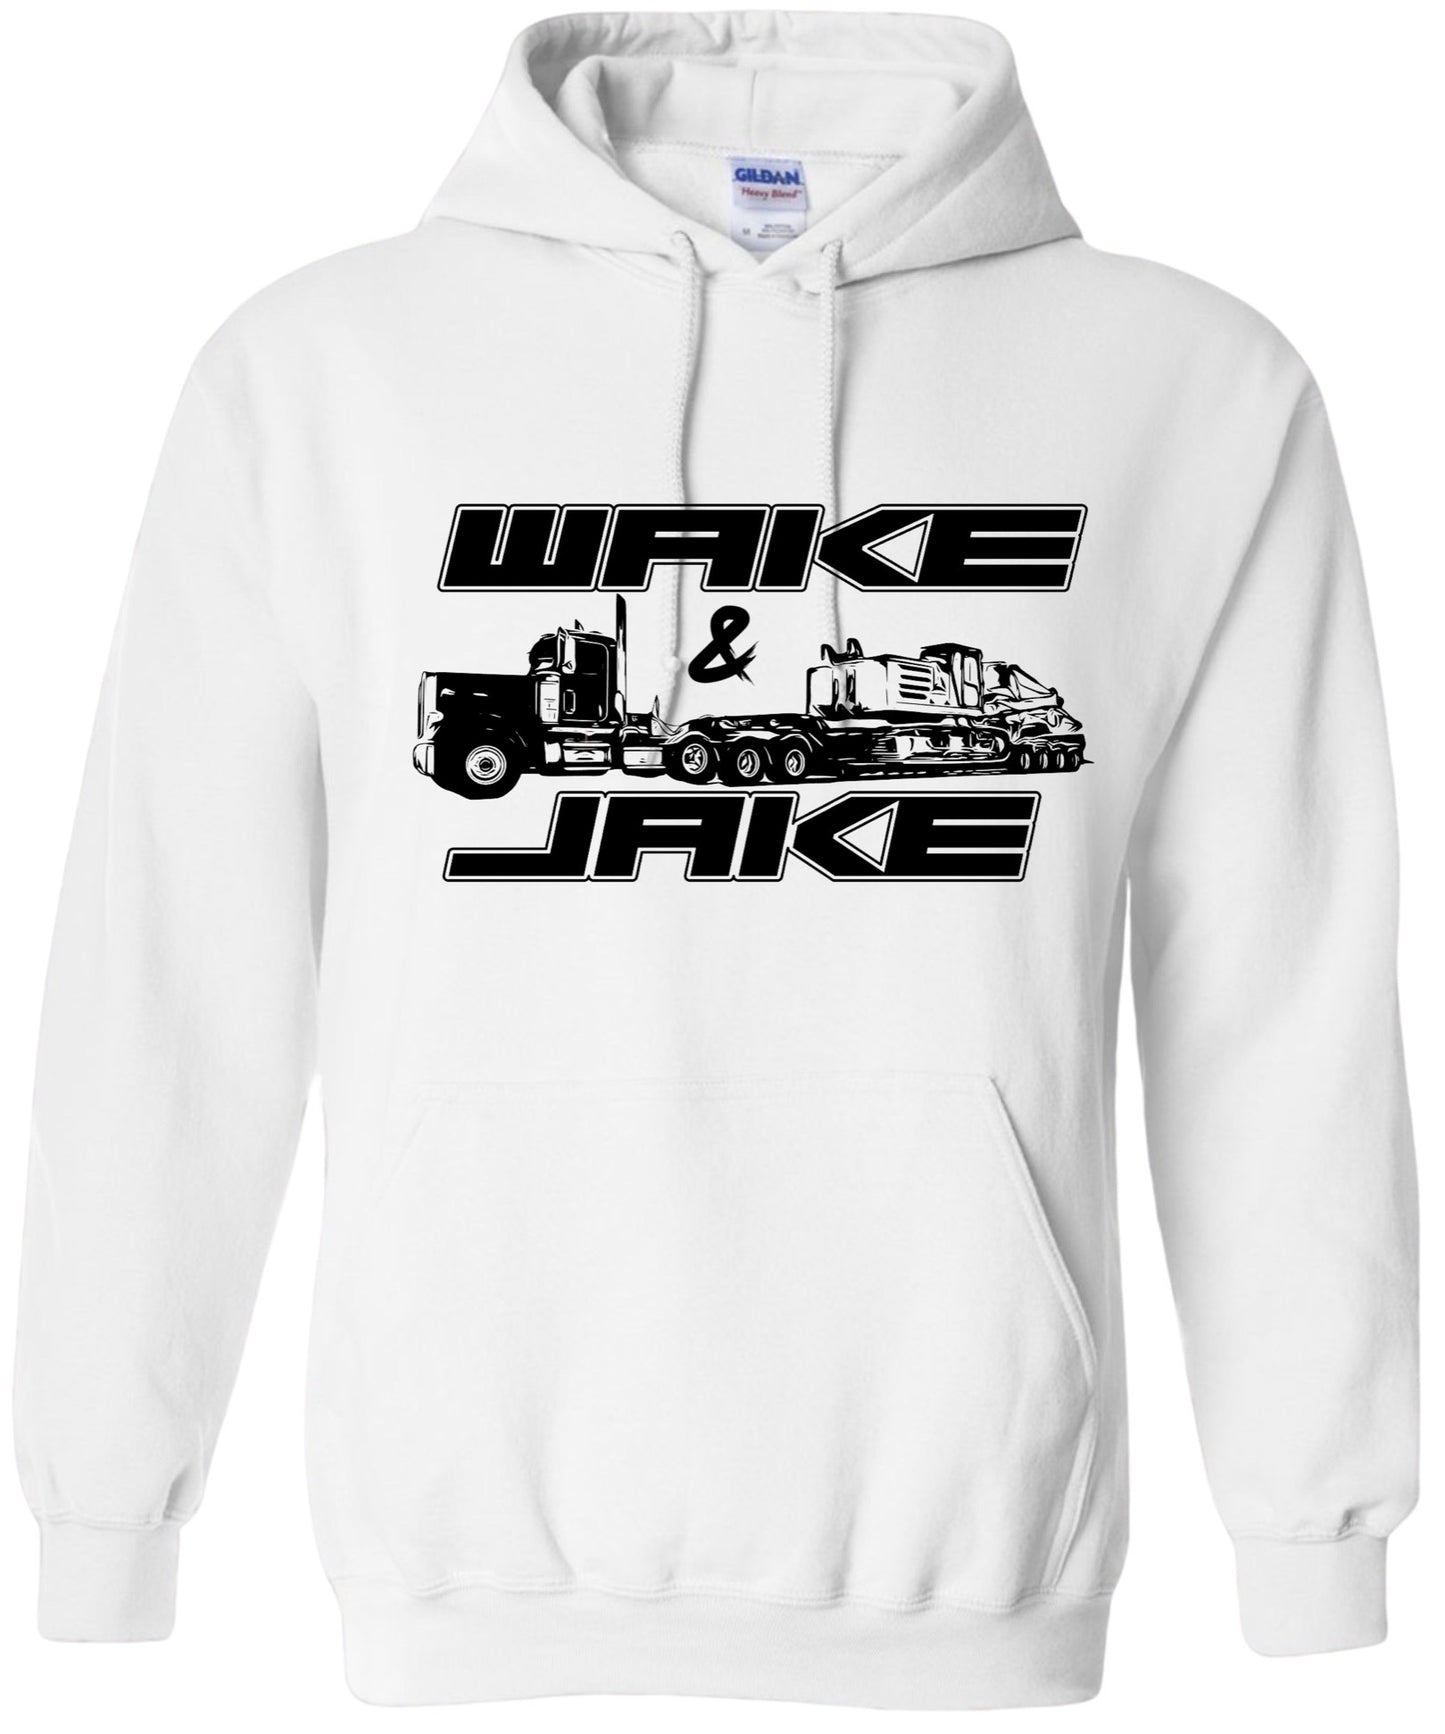 Wake & Jake Hoodie